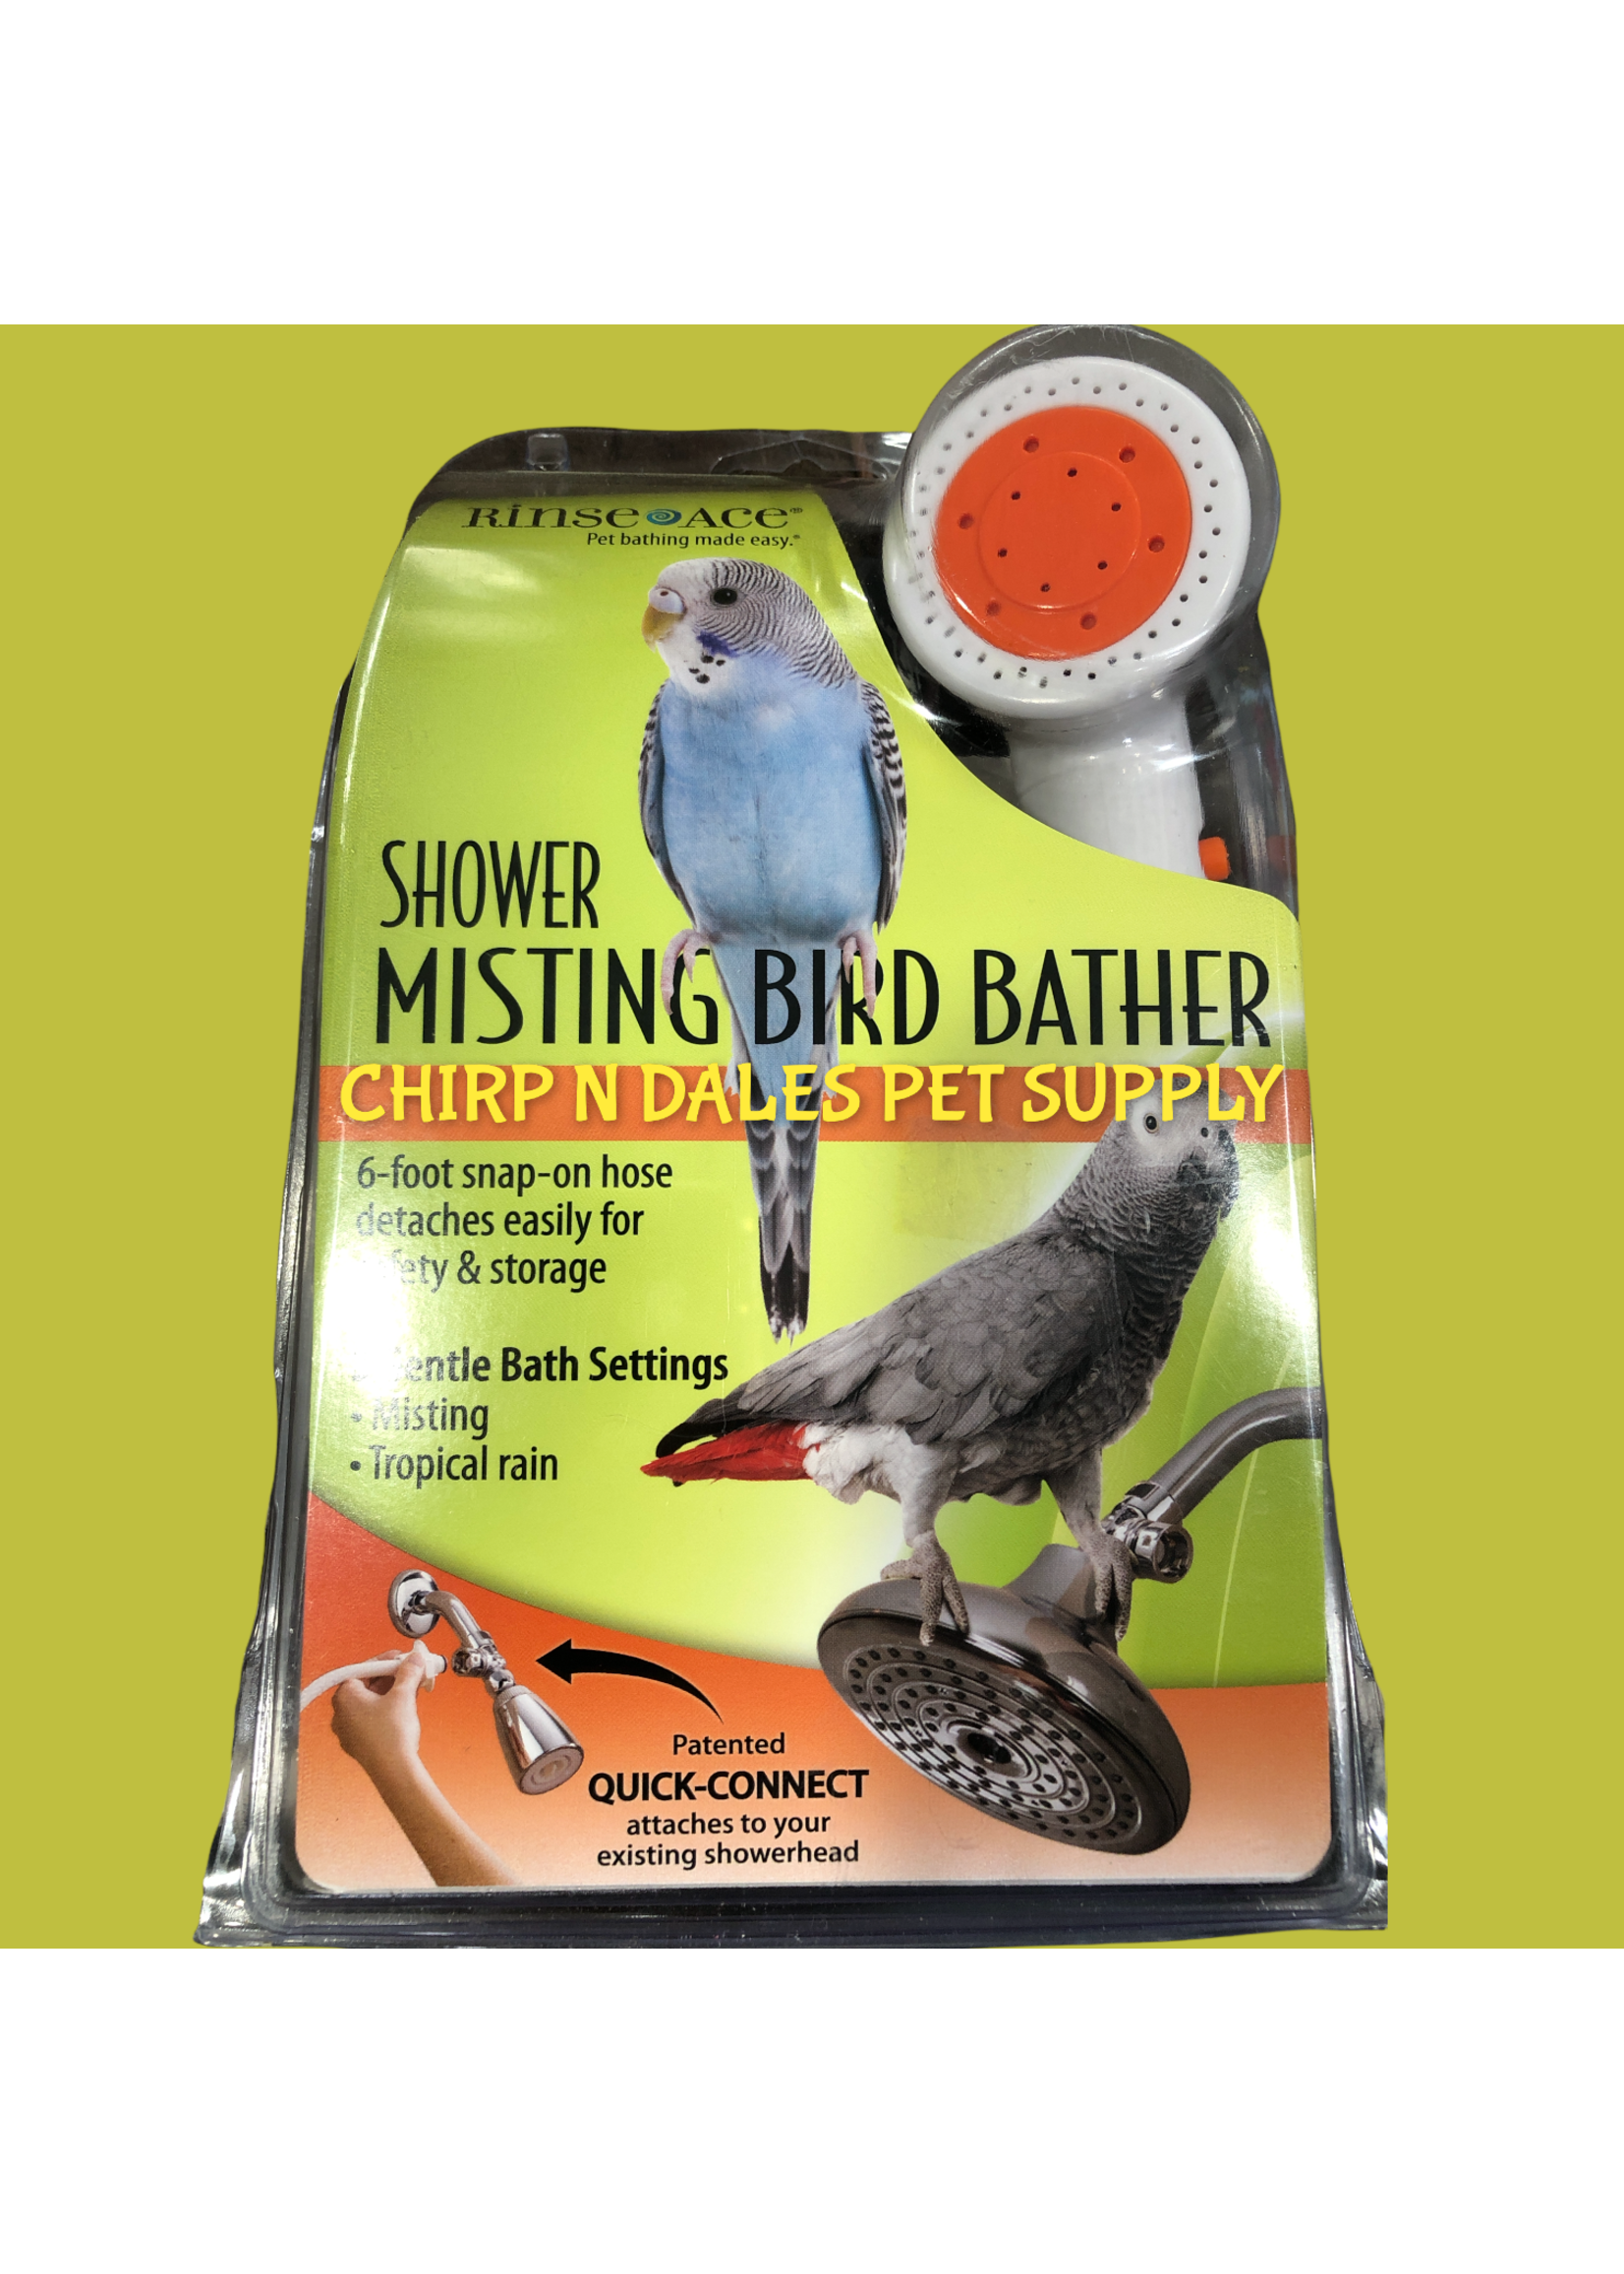 Rinse Ace Shower Misting Bird Bather